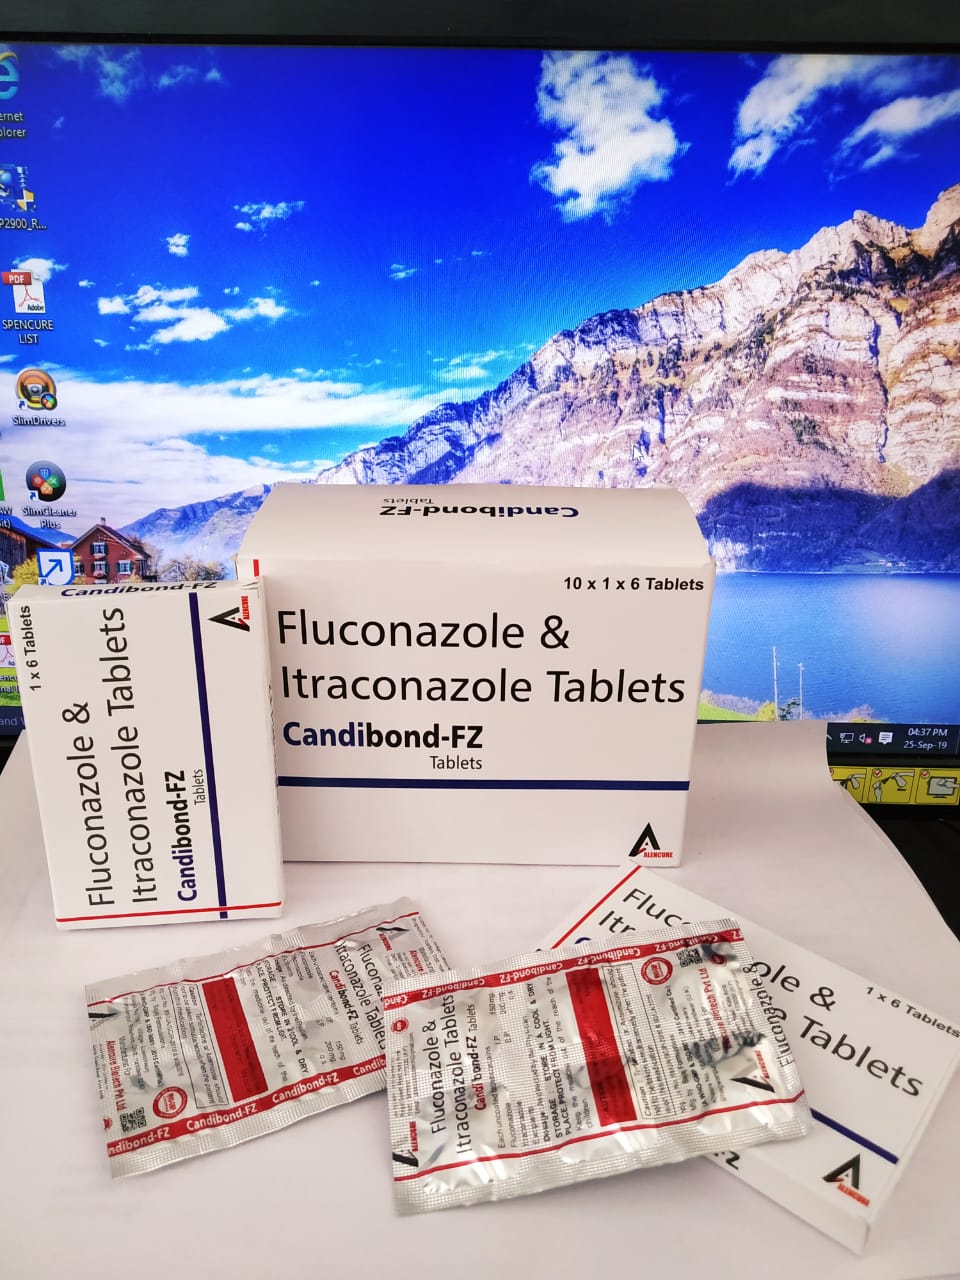 Product Name: CANDIBOND FZ, Compositions of CANDIBOND FZ are Fluconazole & Itraconazole Tablets - Alencure Biotech Pvt Ltd